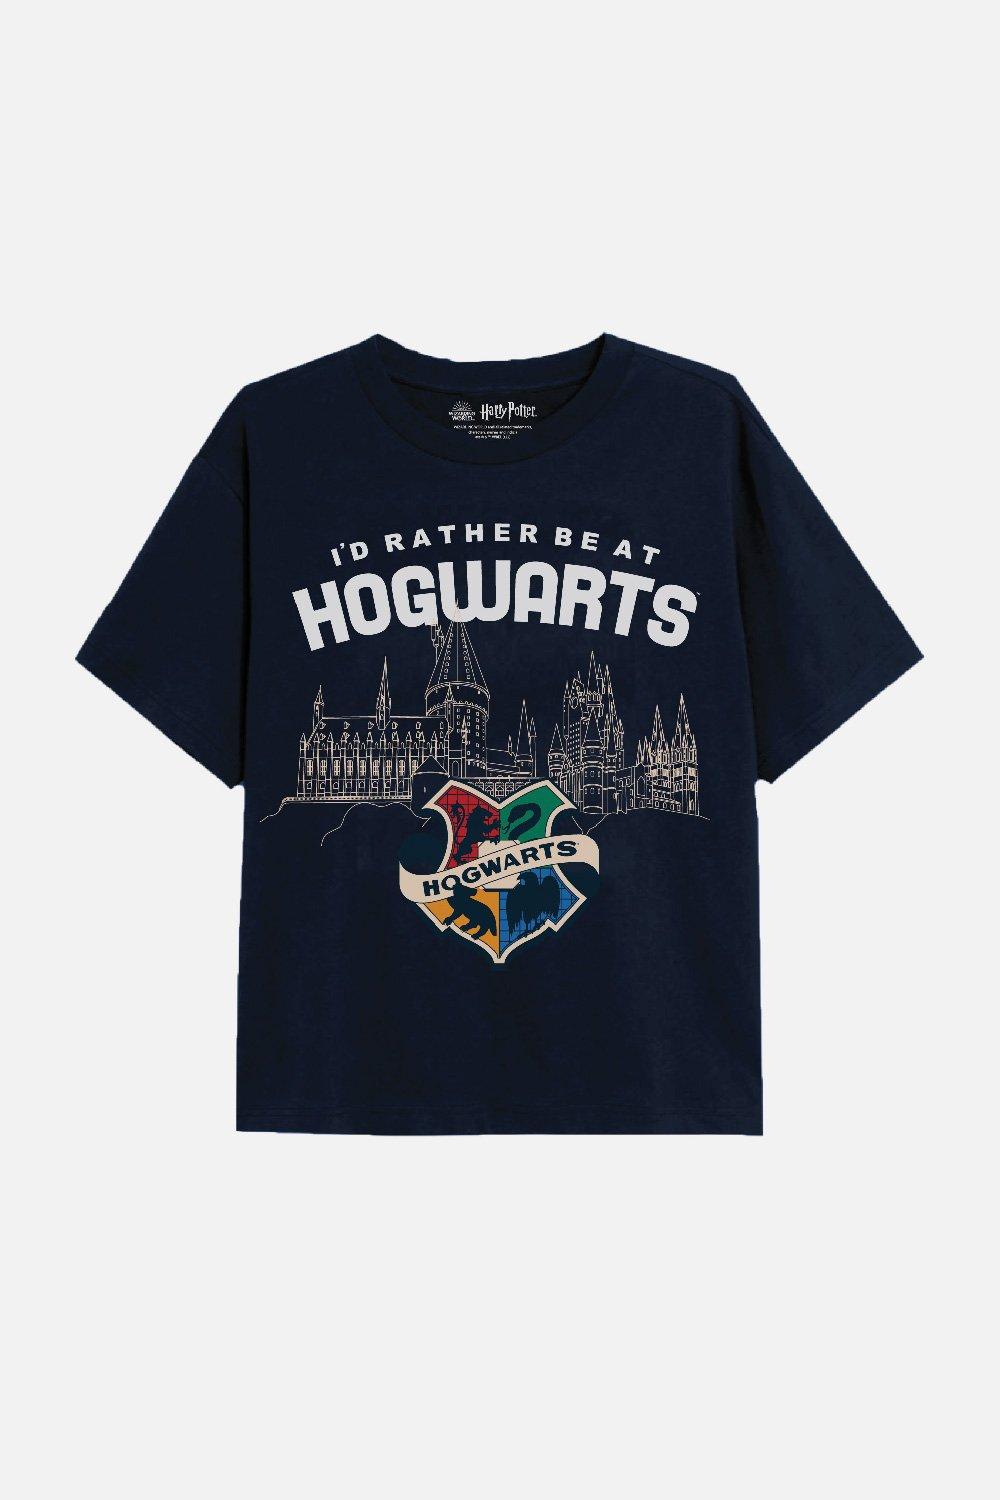 Rather Be At Hogwarts Girls T-Shirt